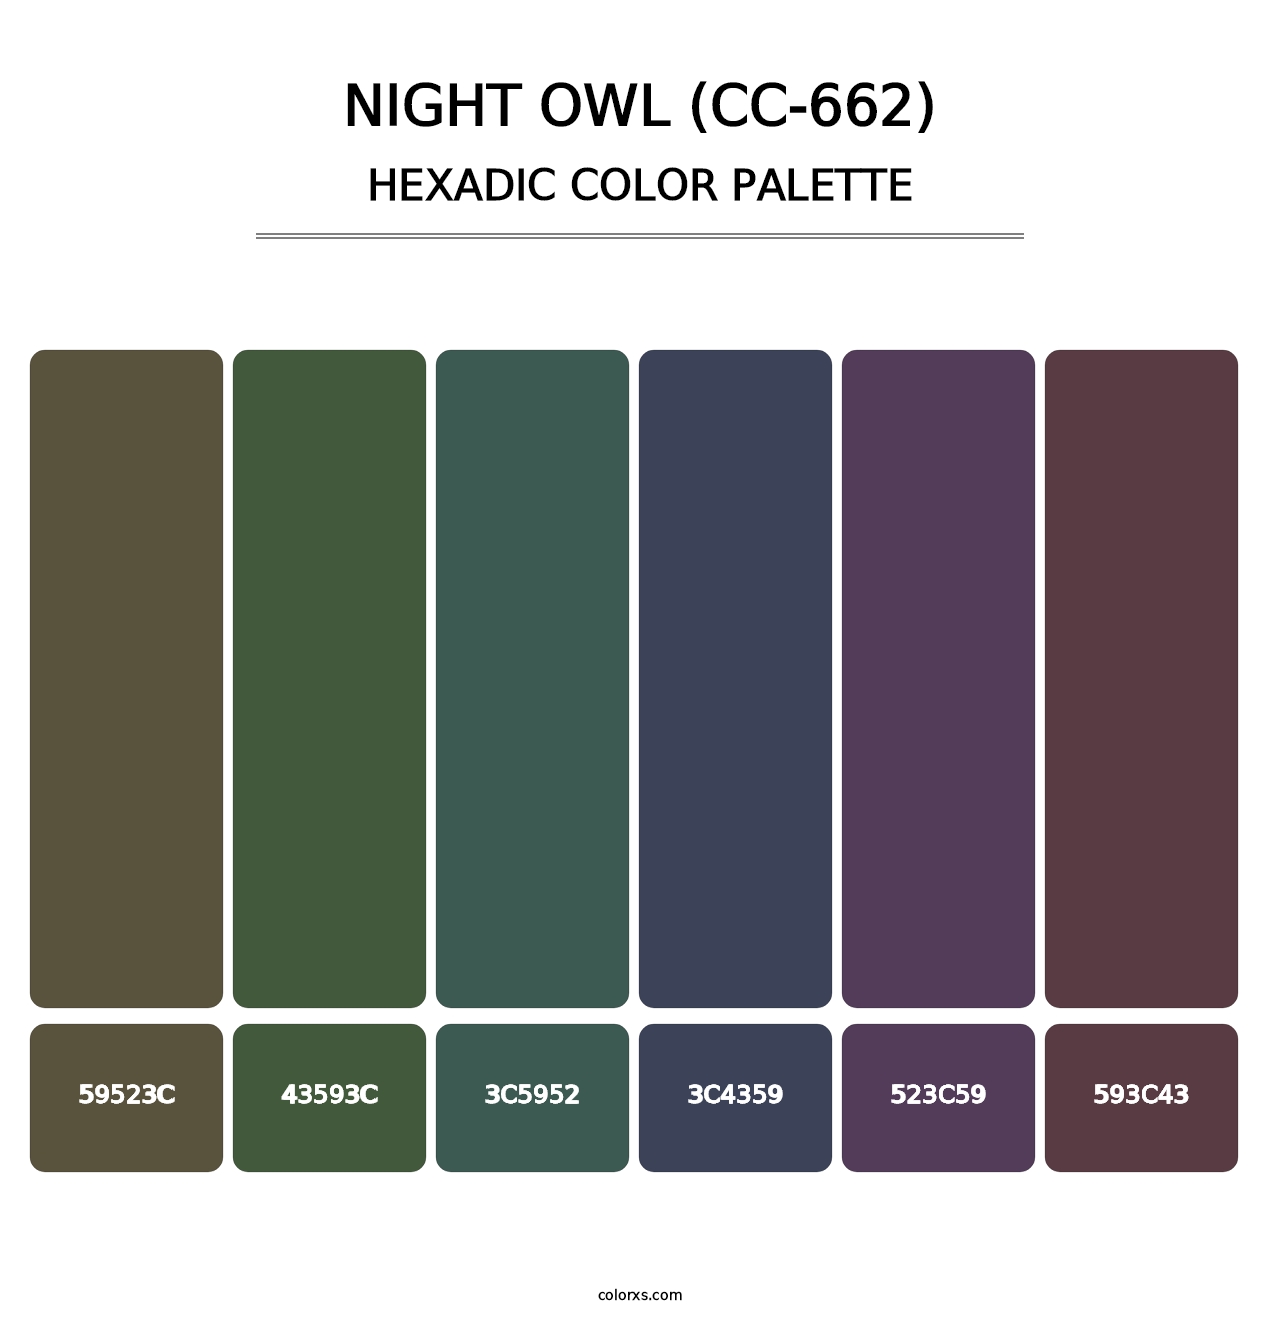 Night Owl (CC-662) - Hexadic Color Palette